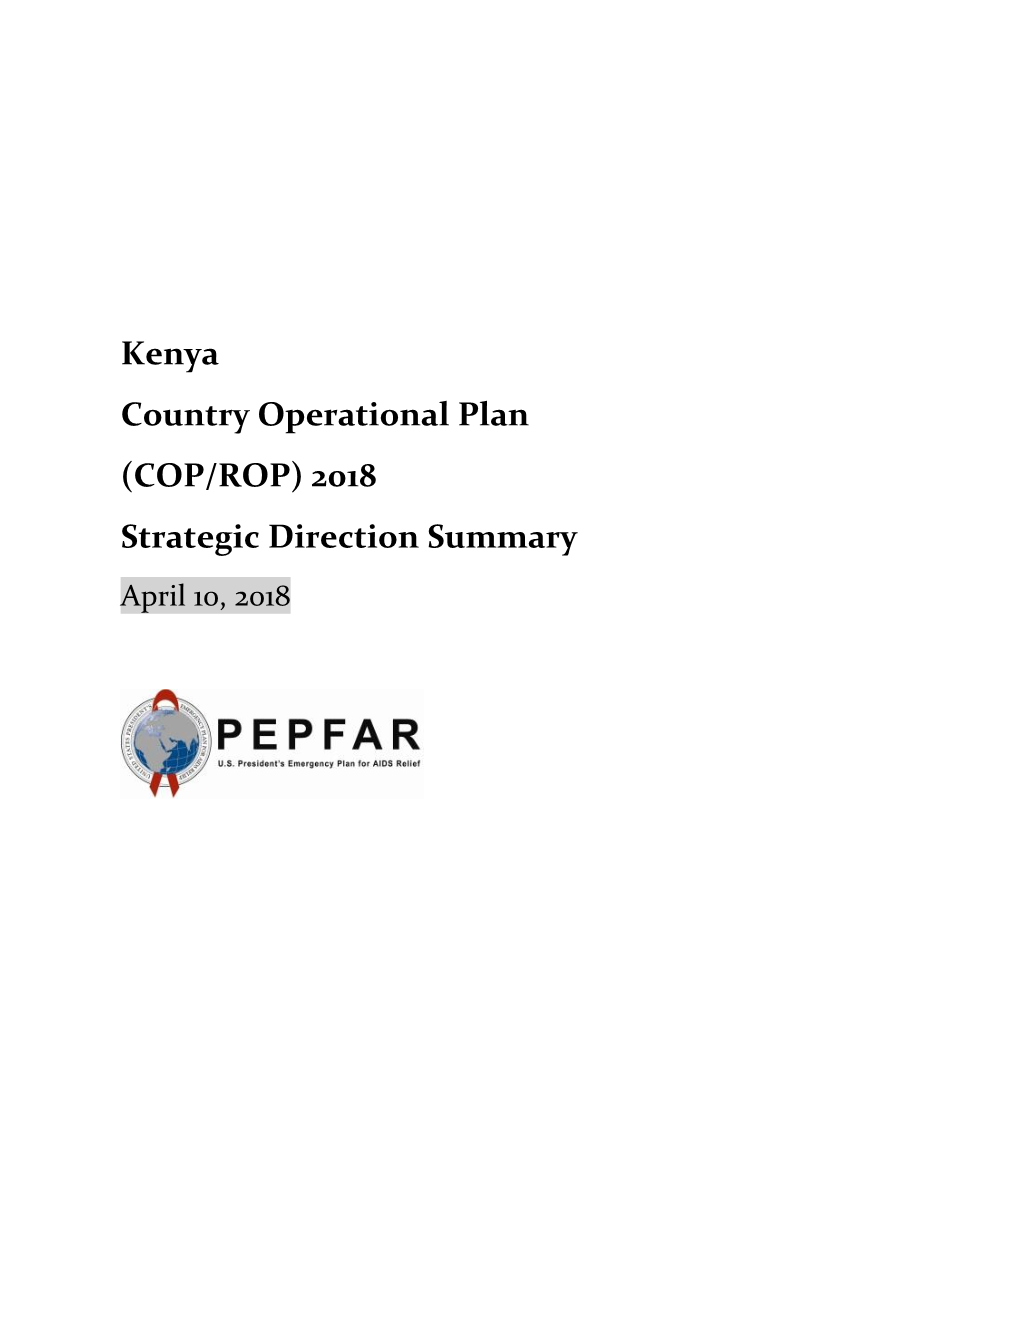 Kenya Country Operational Plan 2018 Strategic Direction Summary